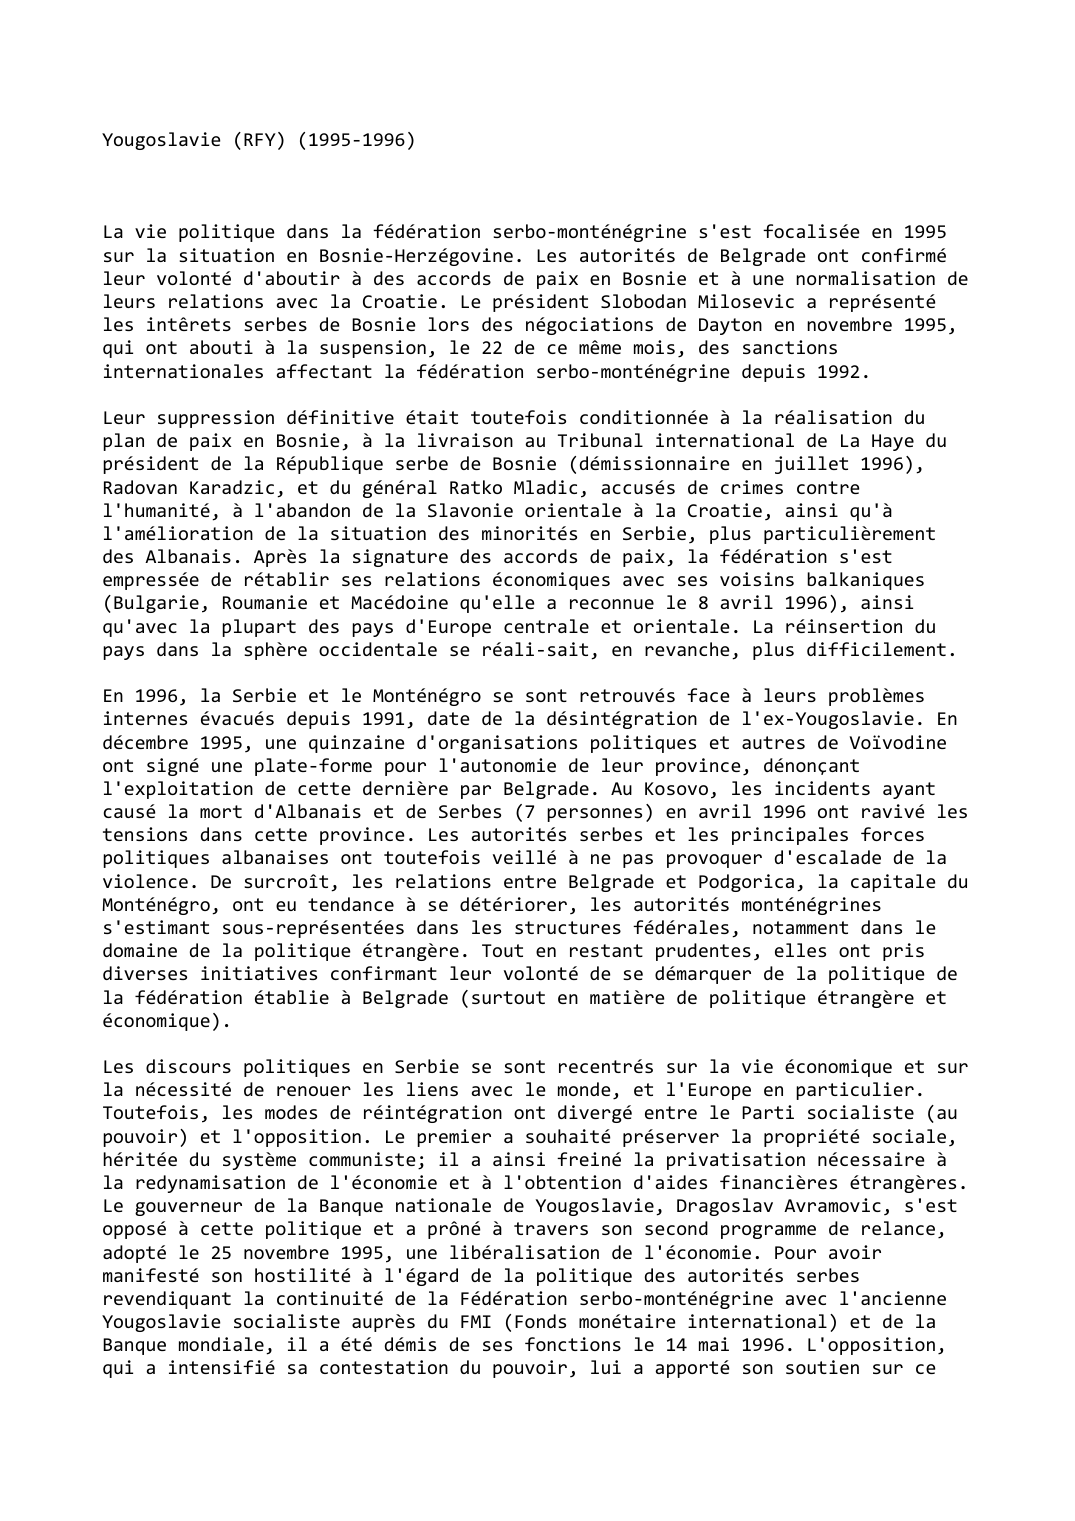 Prévisualisation du document Yougoslavie (RFY) (1995-1996)